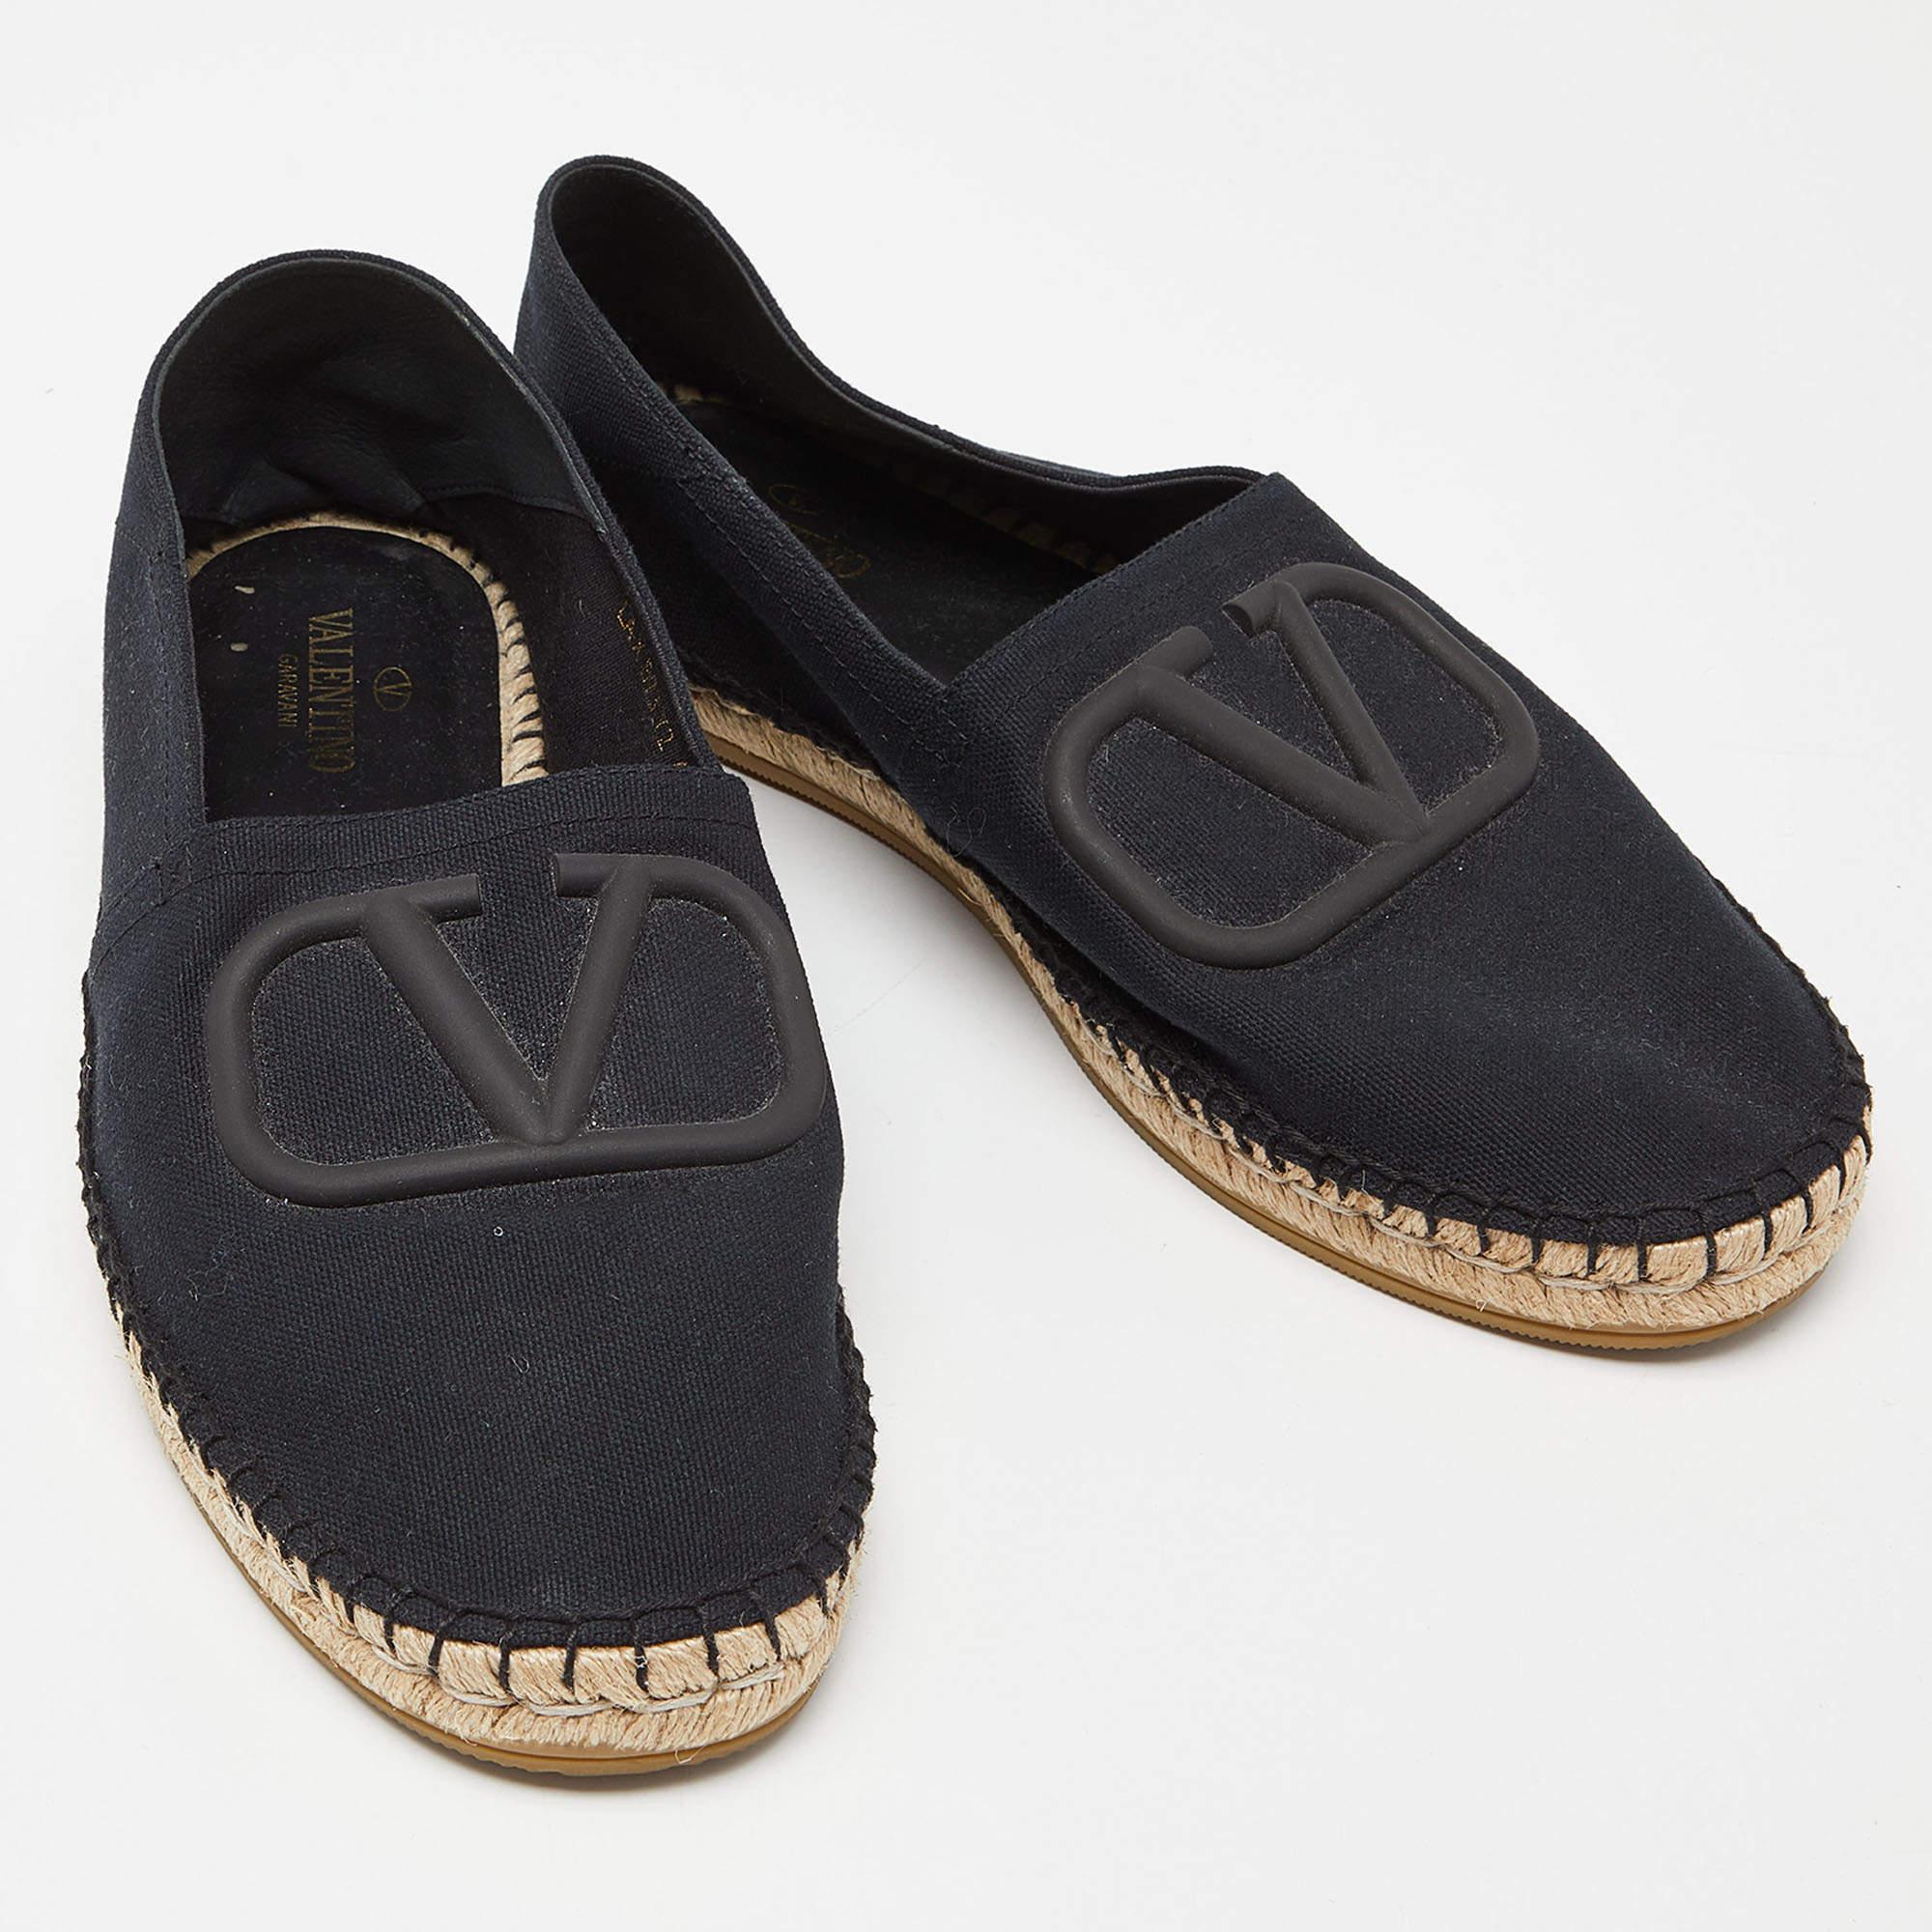 Valentino Black Canvas VLogo Slip On Espadrilles Loafers Size 42 4